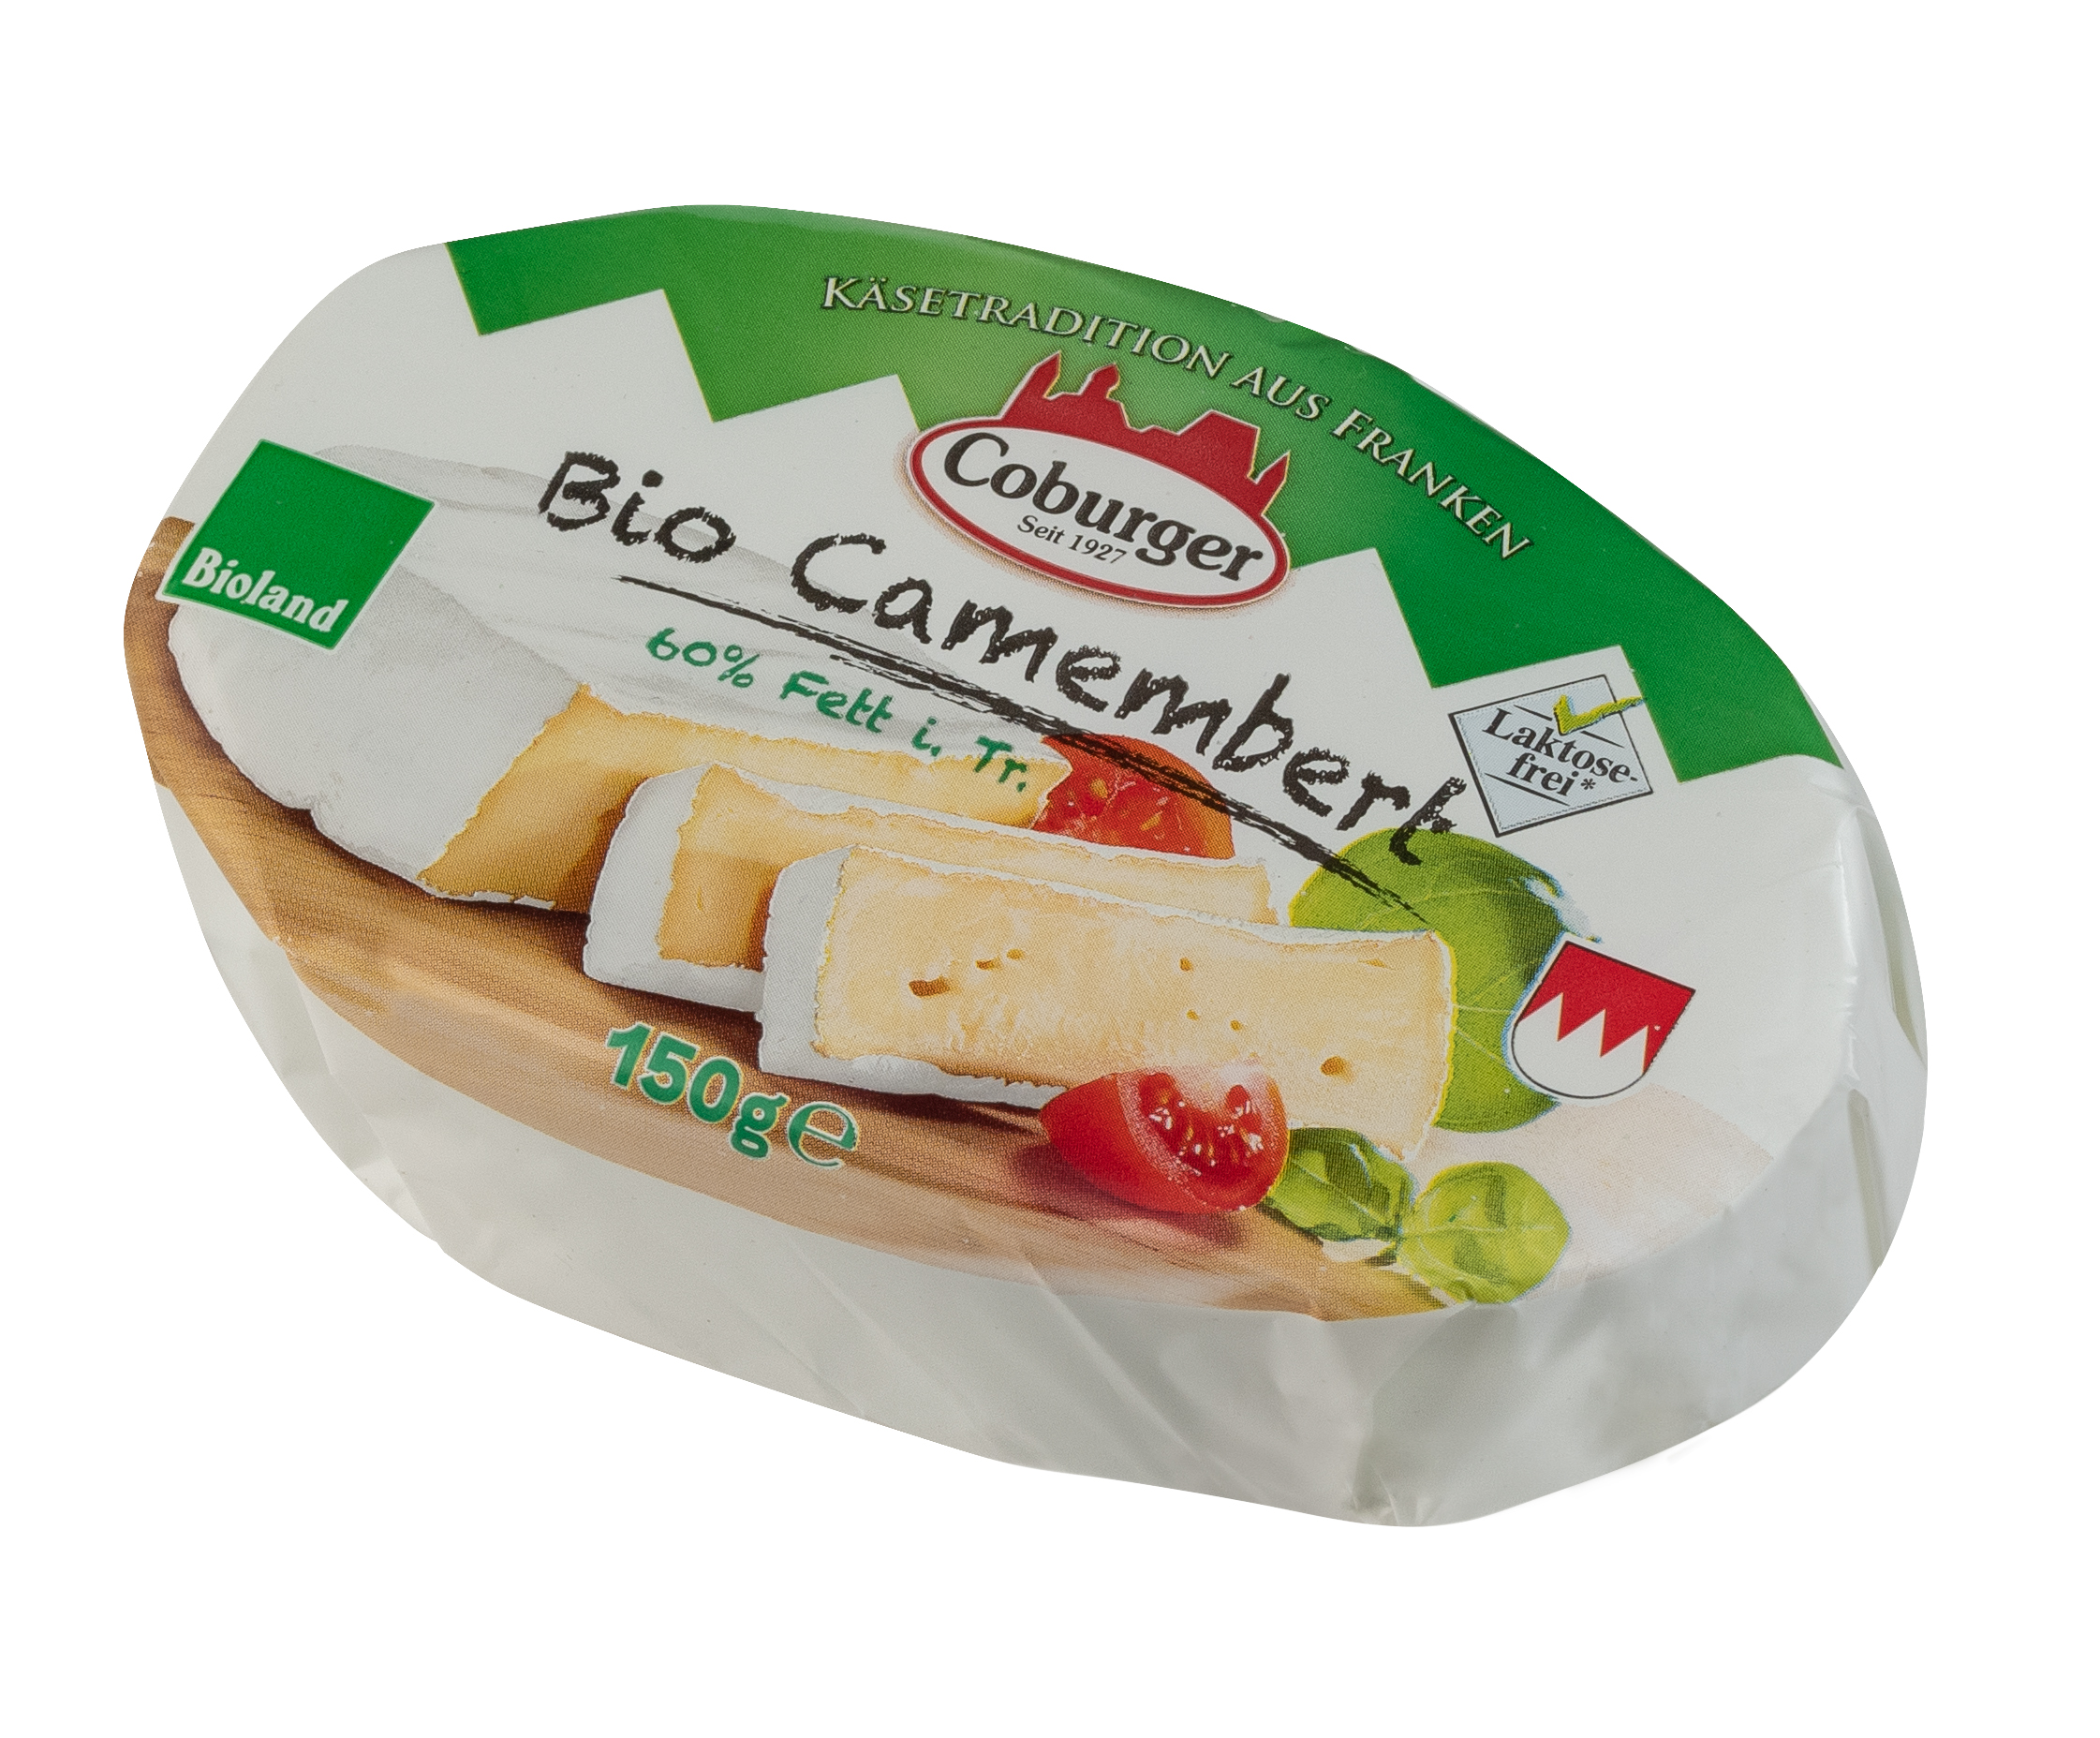 Coburger Bioland oval, Oberfranken Camembert West Milchwerke 150g 